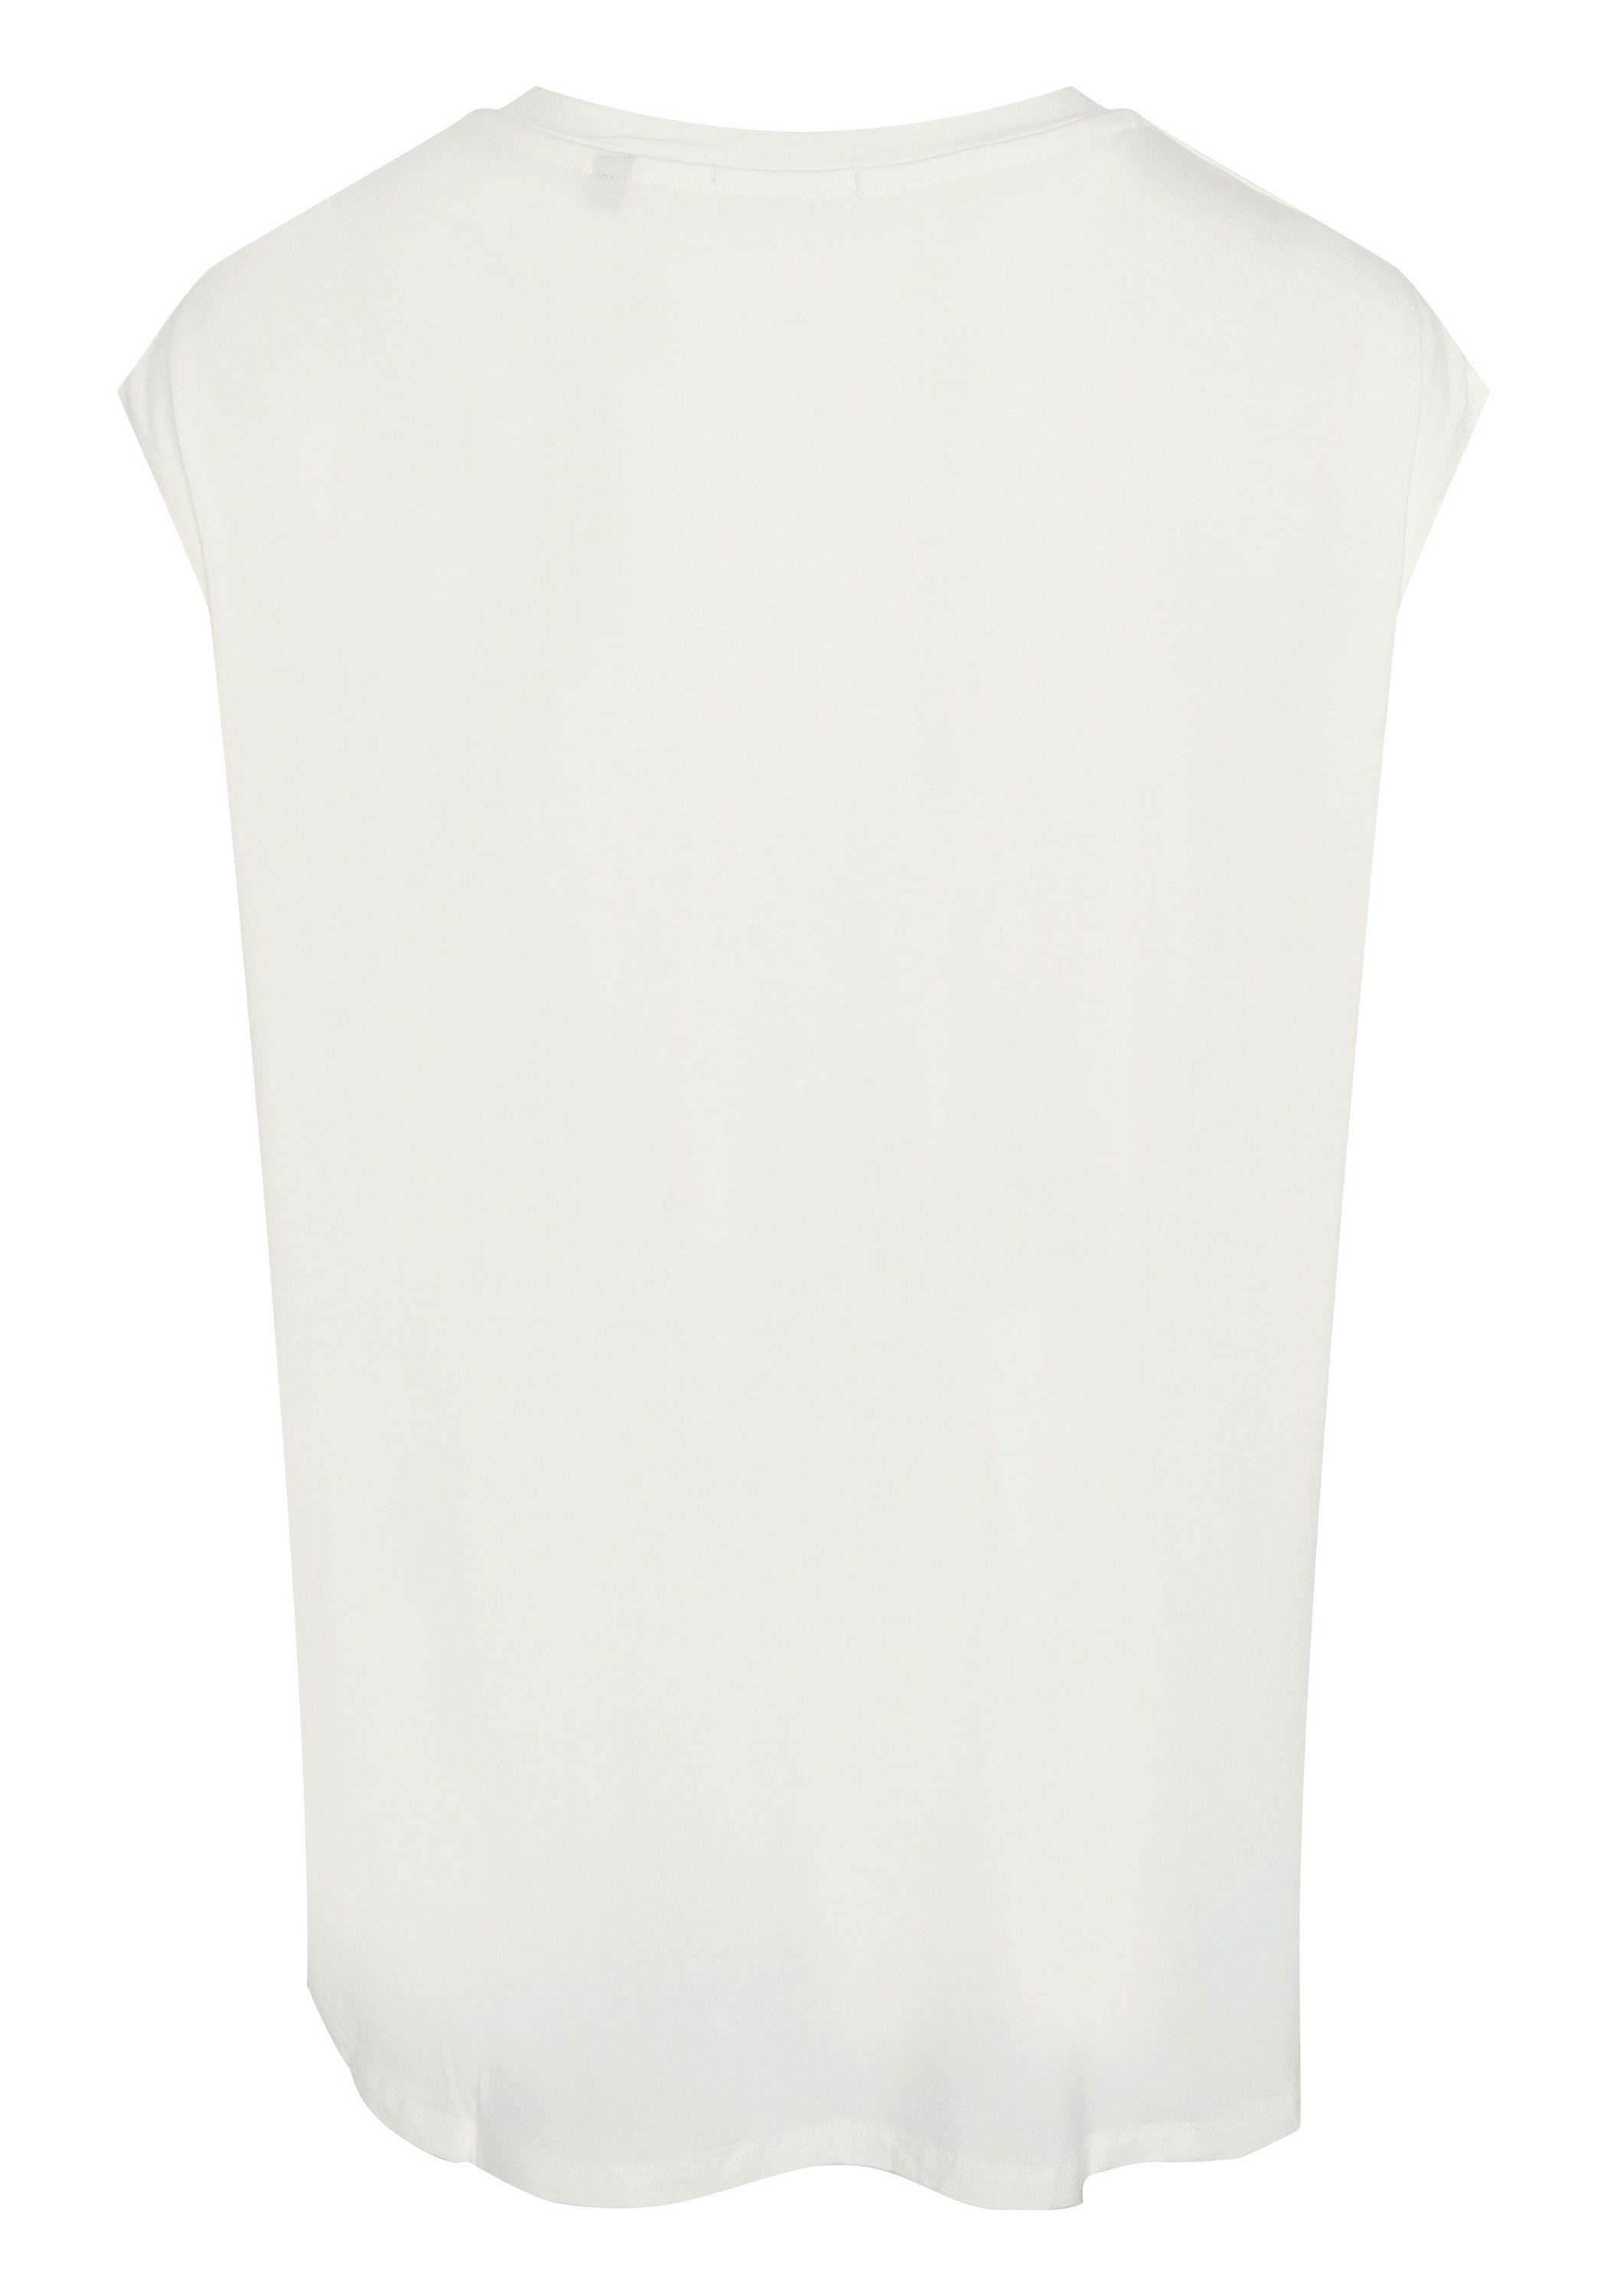 Chiemsee Print-Shirt T-Shirt White Star Viskose-Elasthanmix Labelprint aus mit 1